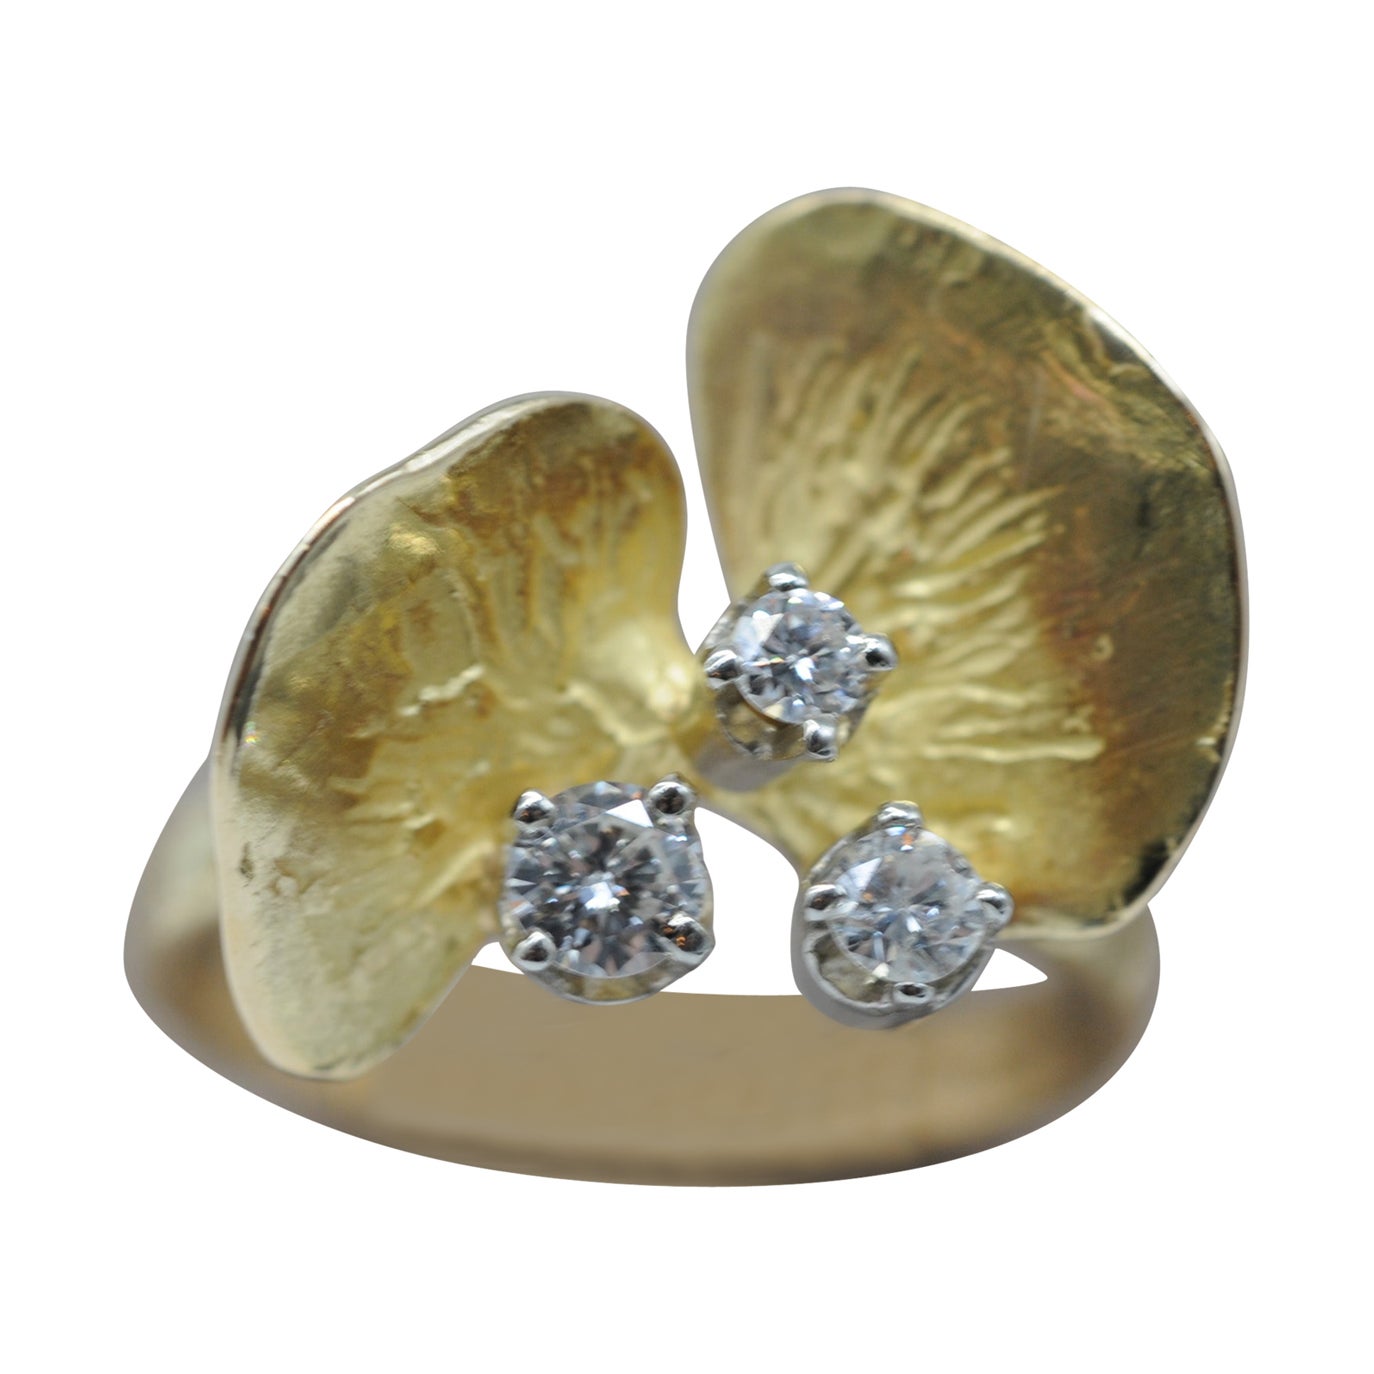 Majestic gold ring with diamonds by master goldsmith Wurzbacher